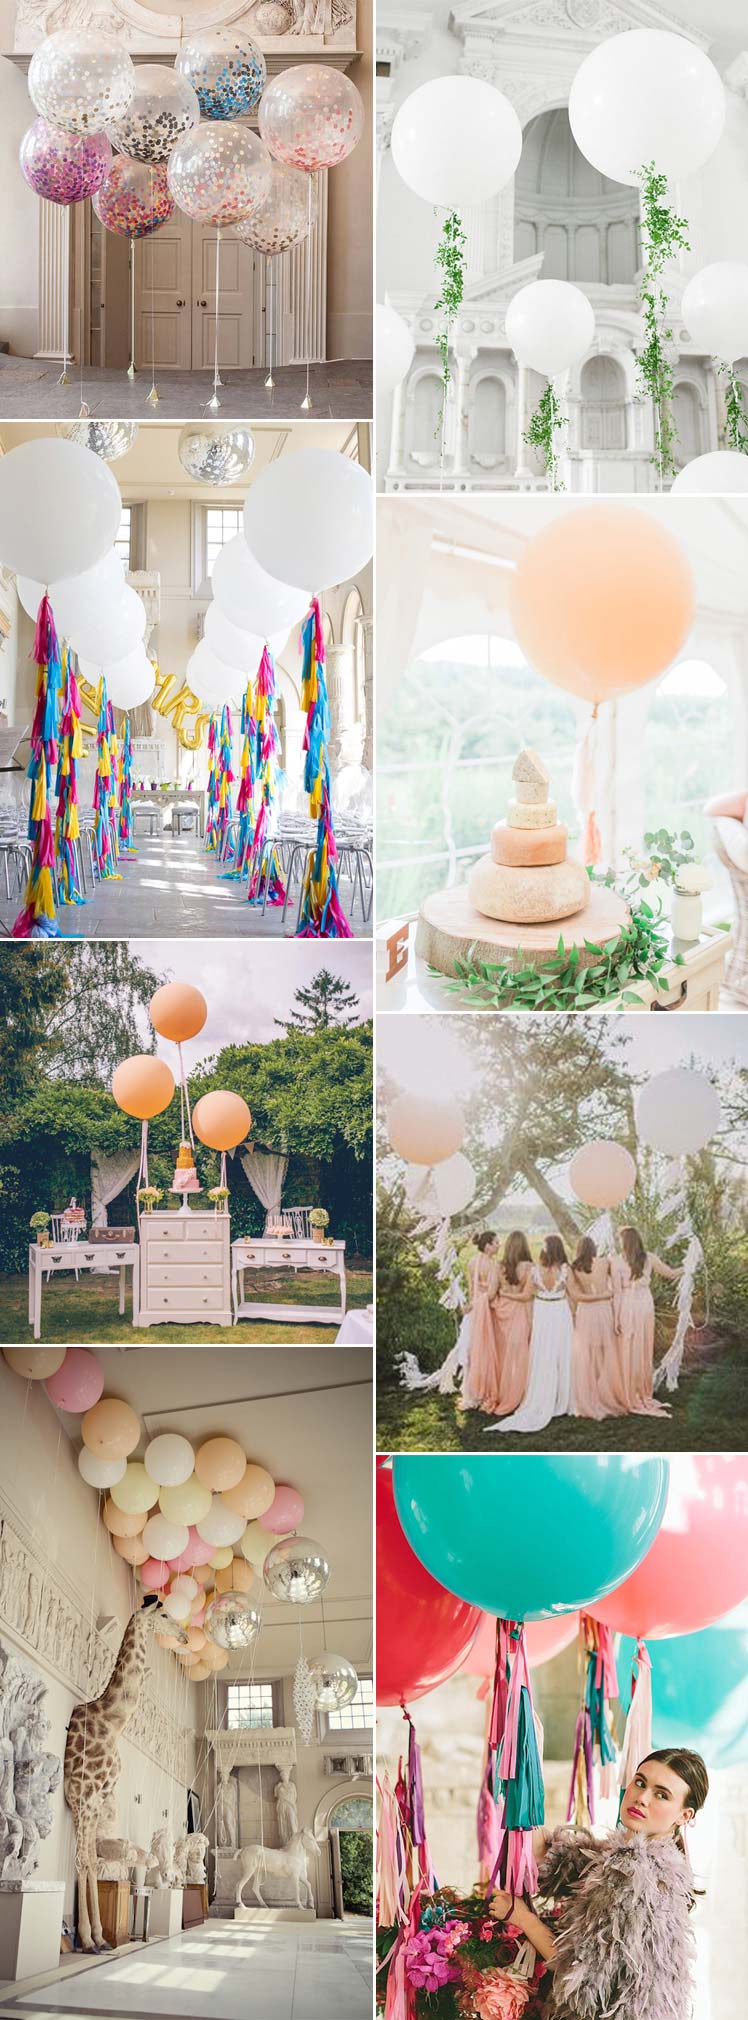 Grown up and stylish wedding balloon ideas